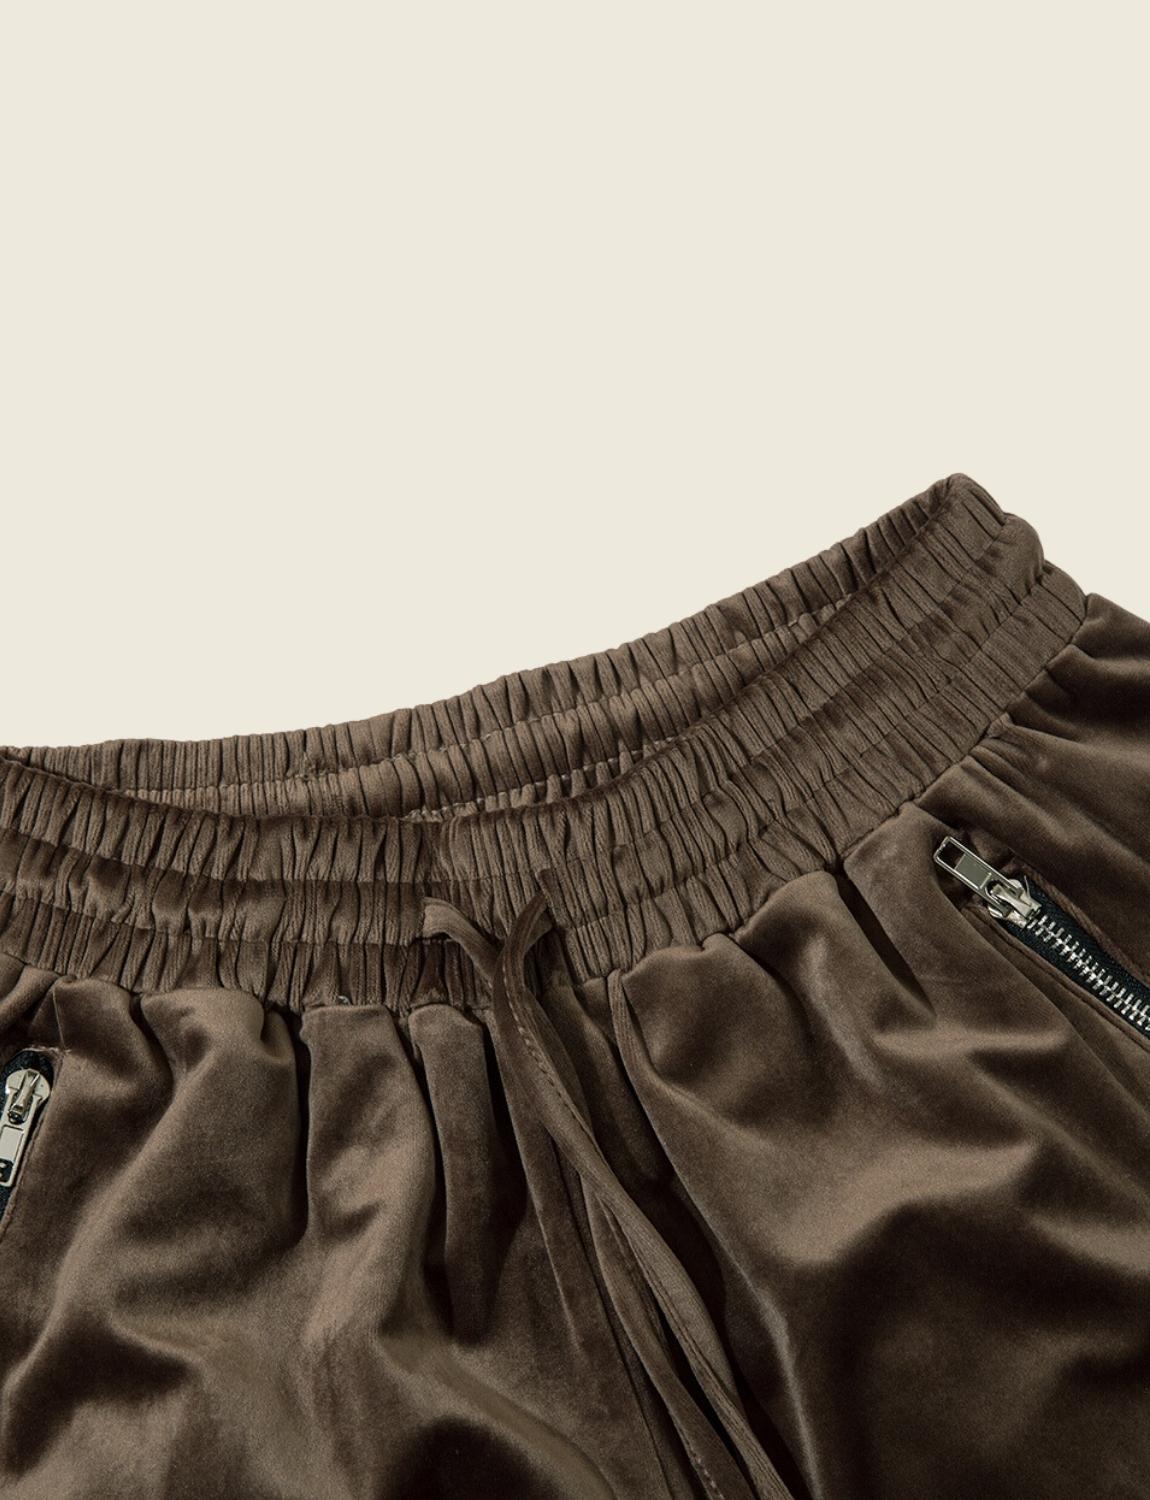 FSW® Elastic Waist Zip-pocket Shorts